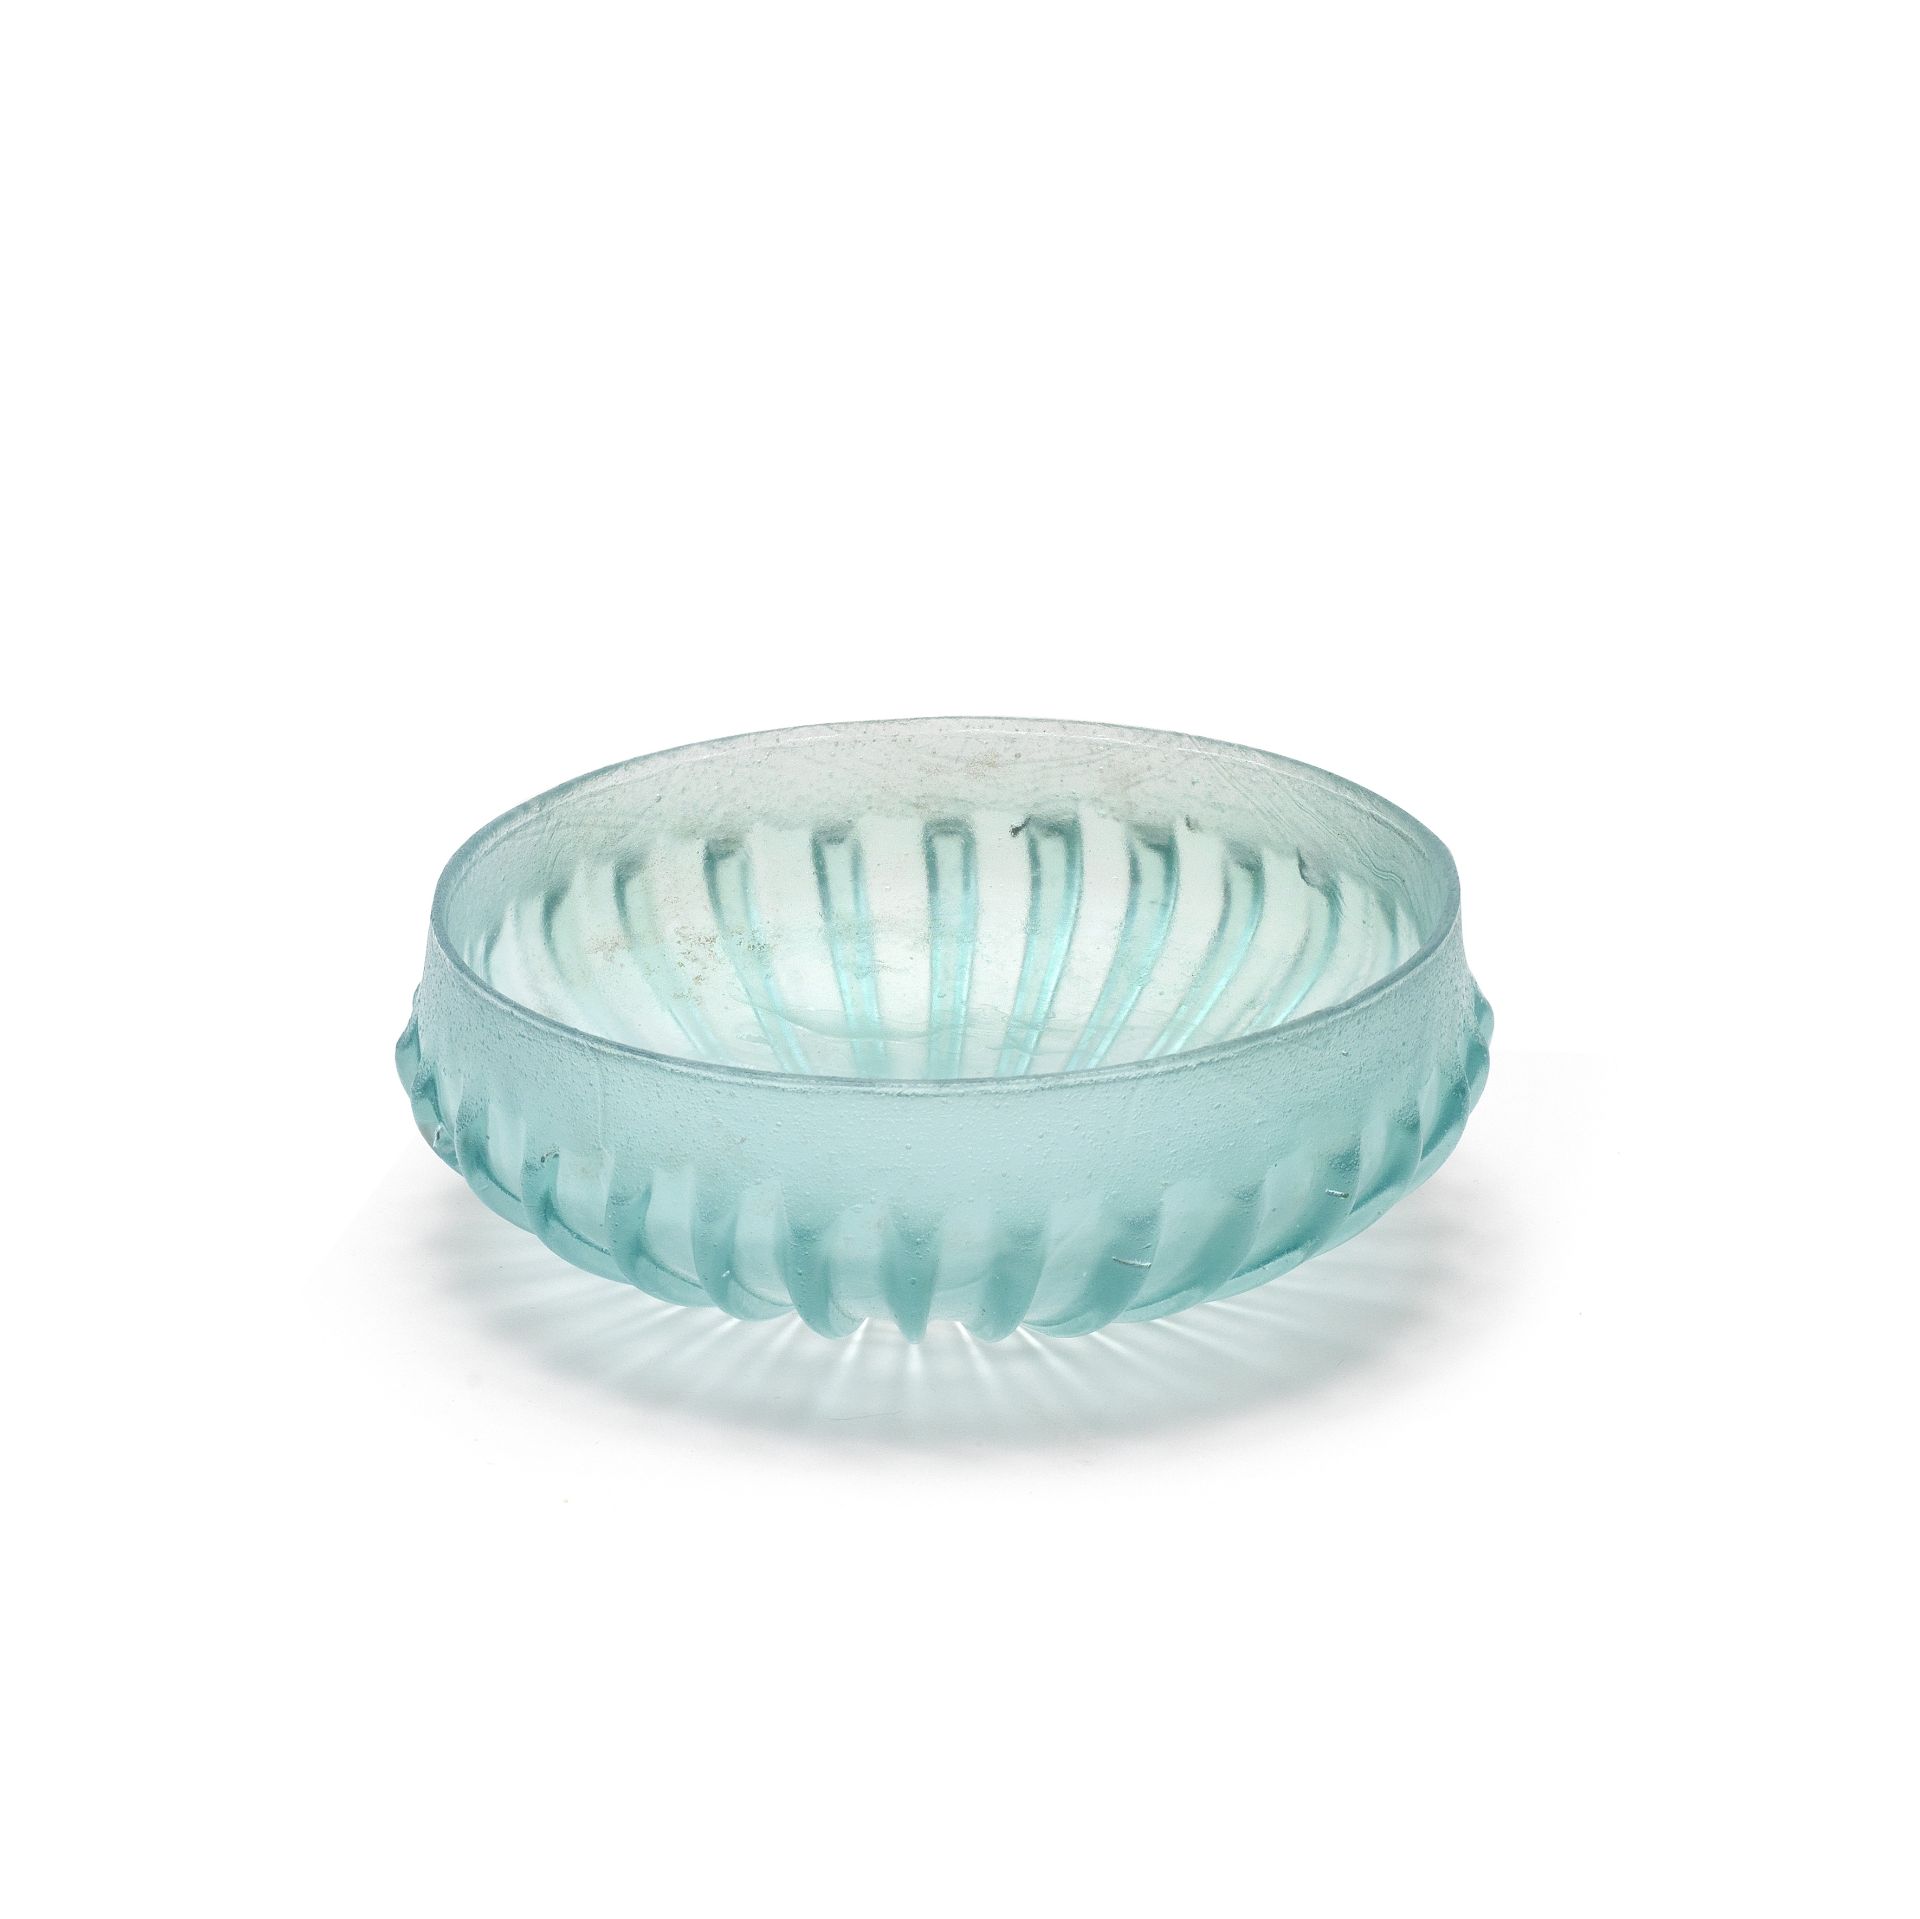 A Roman blue-green glass ribbed bowl